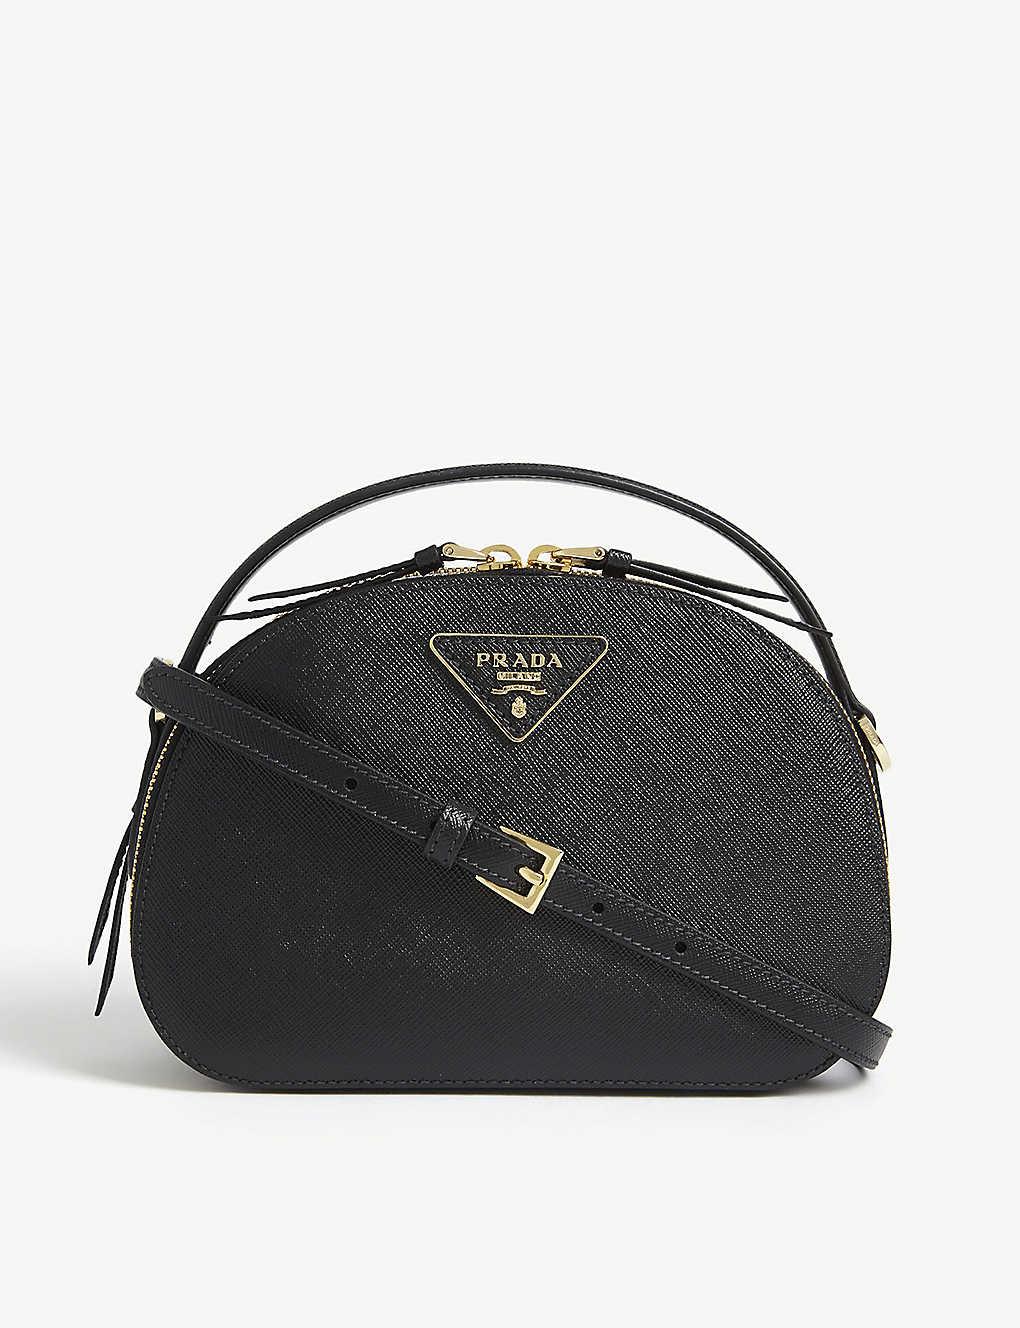 Prada Odette Saffiano leather bag - ShopStyle